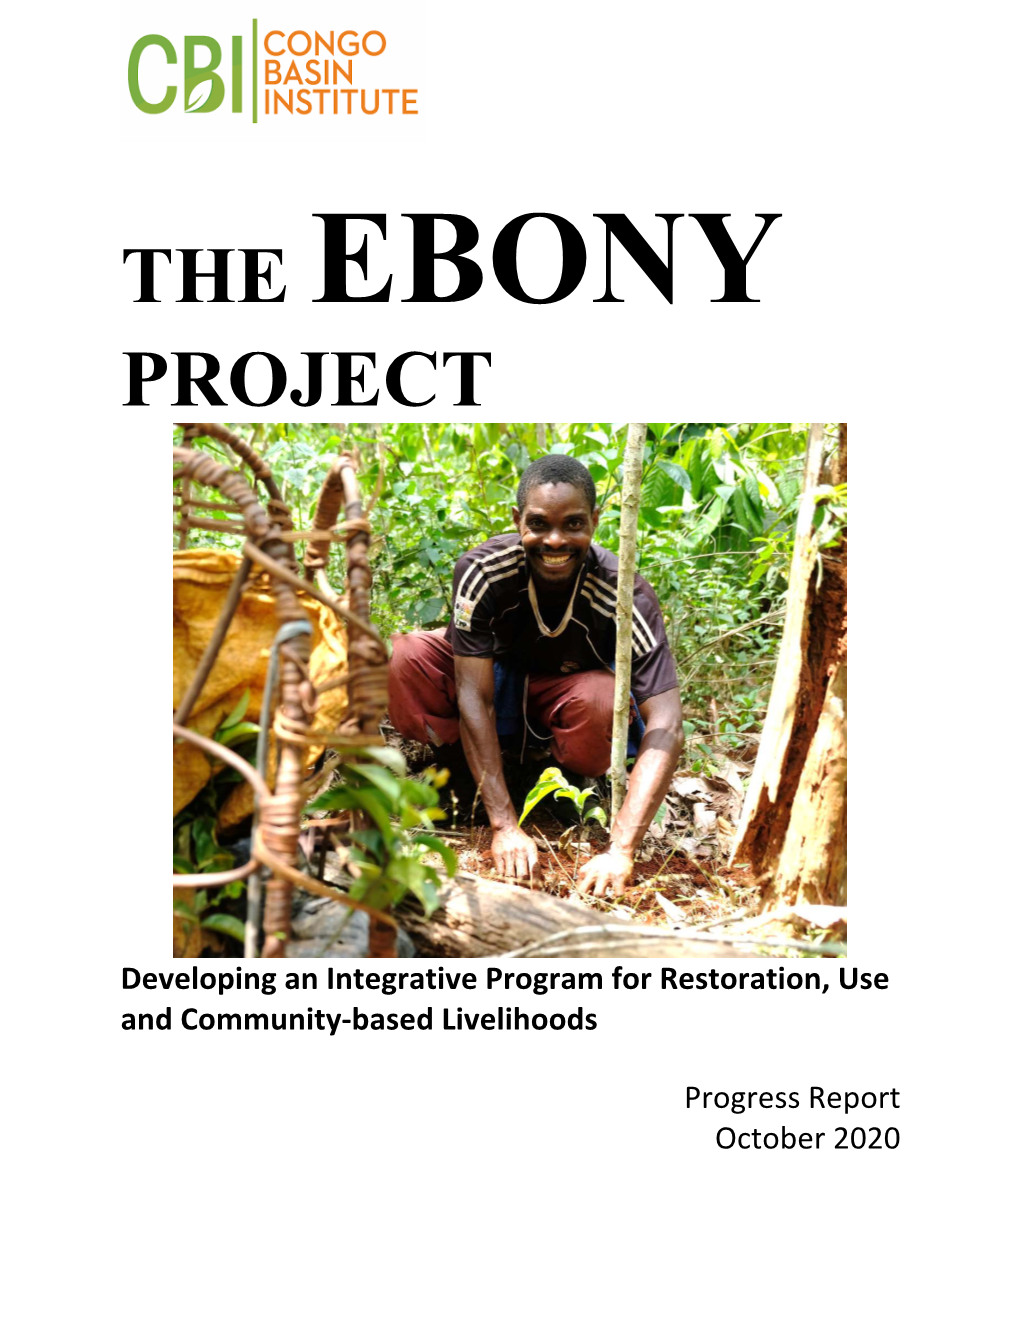 The Ebony Project Developing an Integrative Program for Restoration, Use and Community-Based Livelihoods